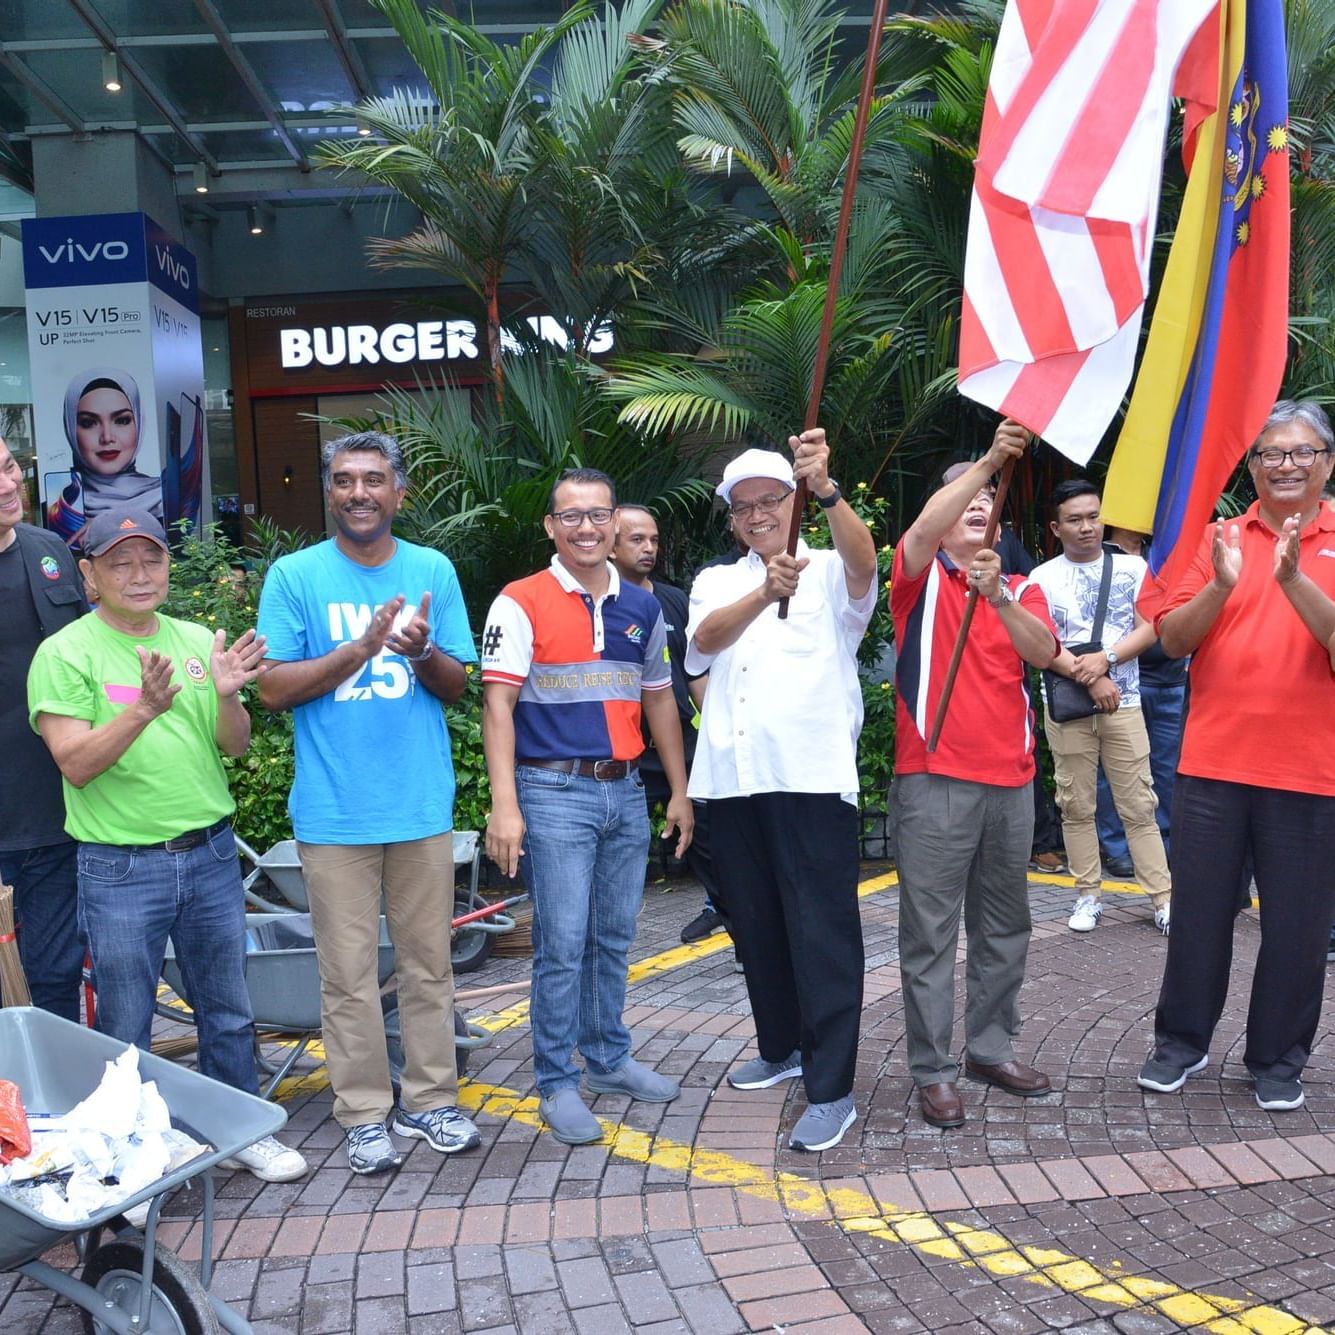 People applaud happily during the Festival near Kuala Lumpur